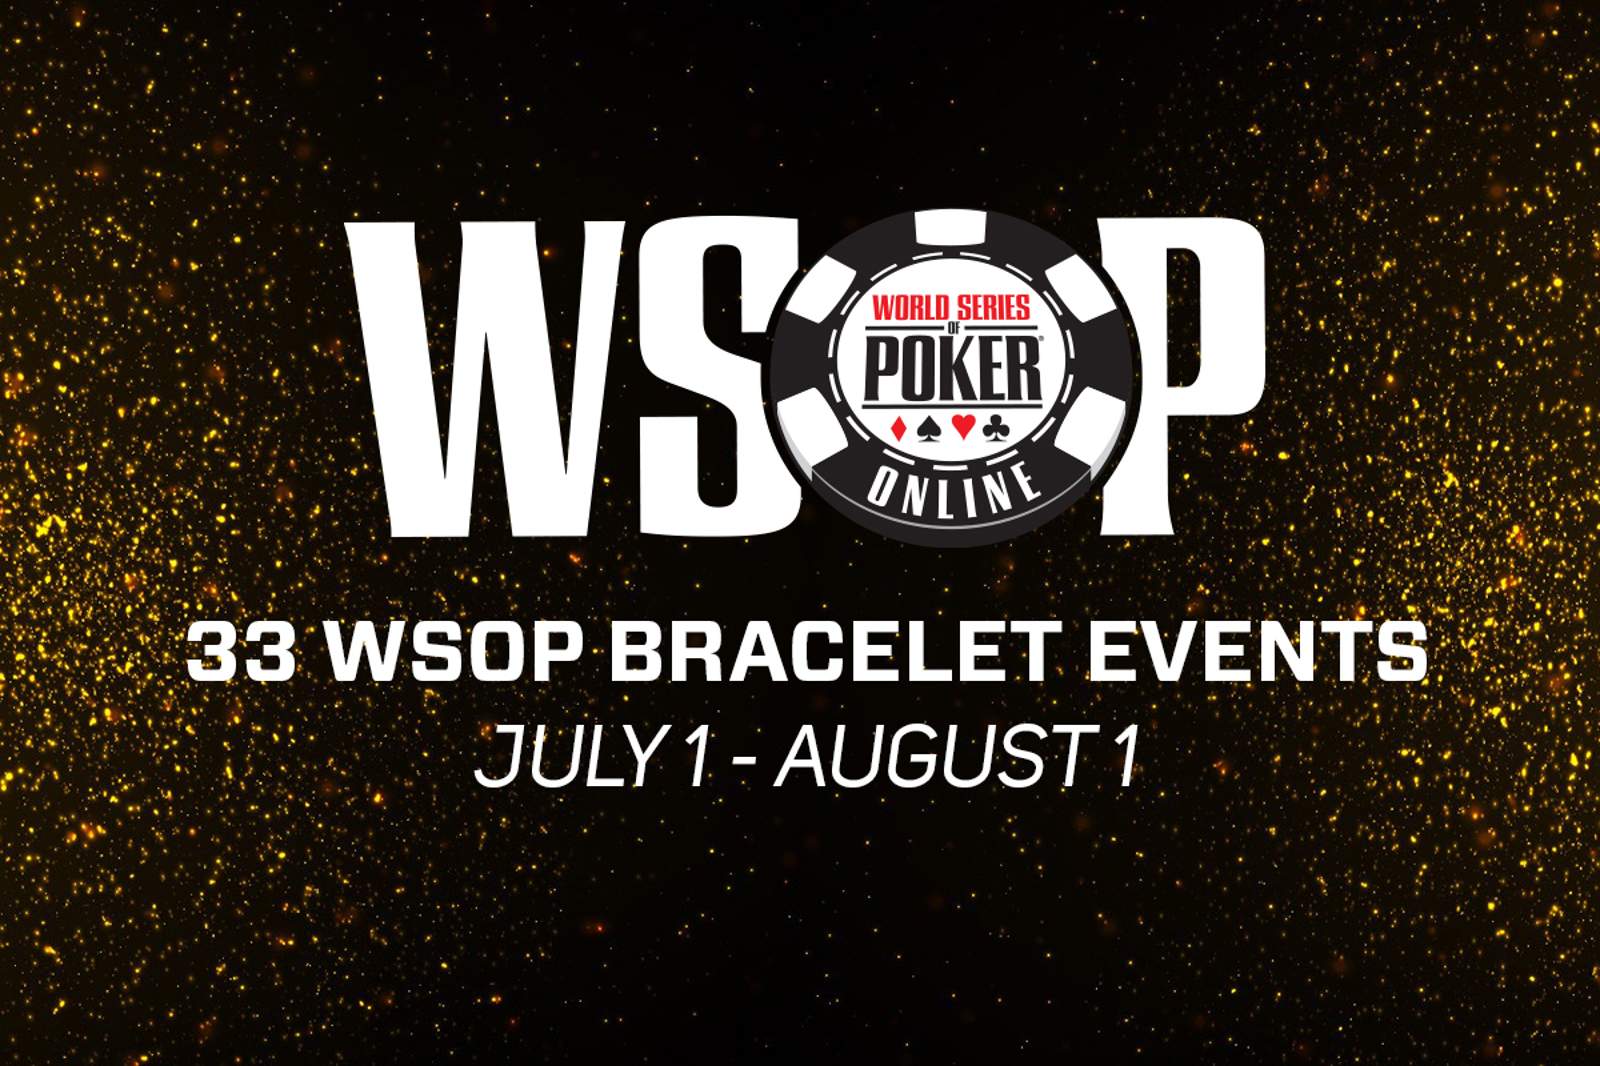 WSOP Online Starts July 1 with 33 Bracelet Events